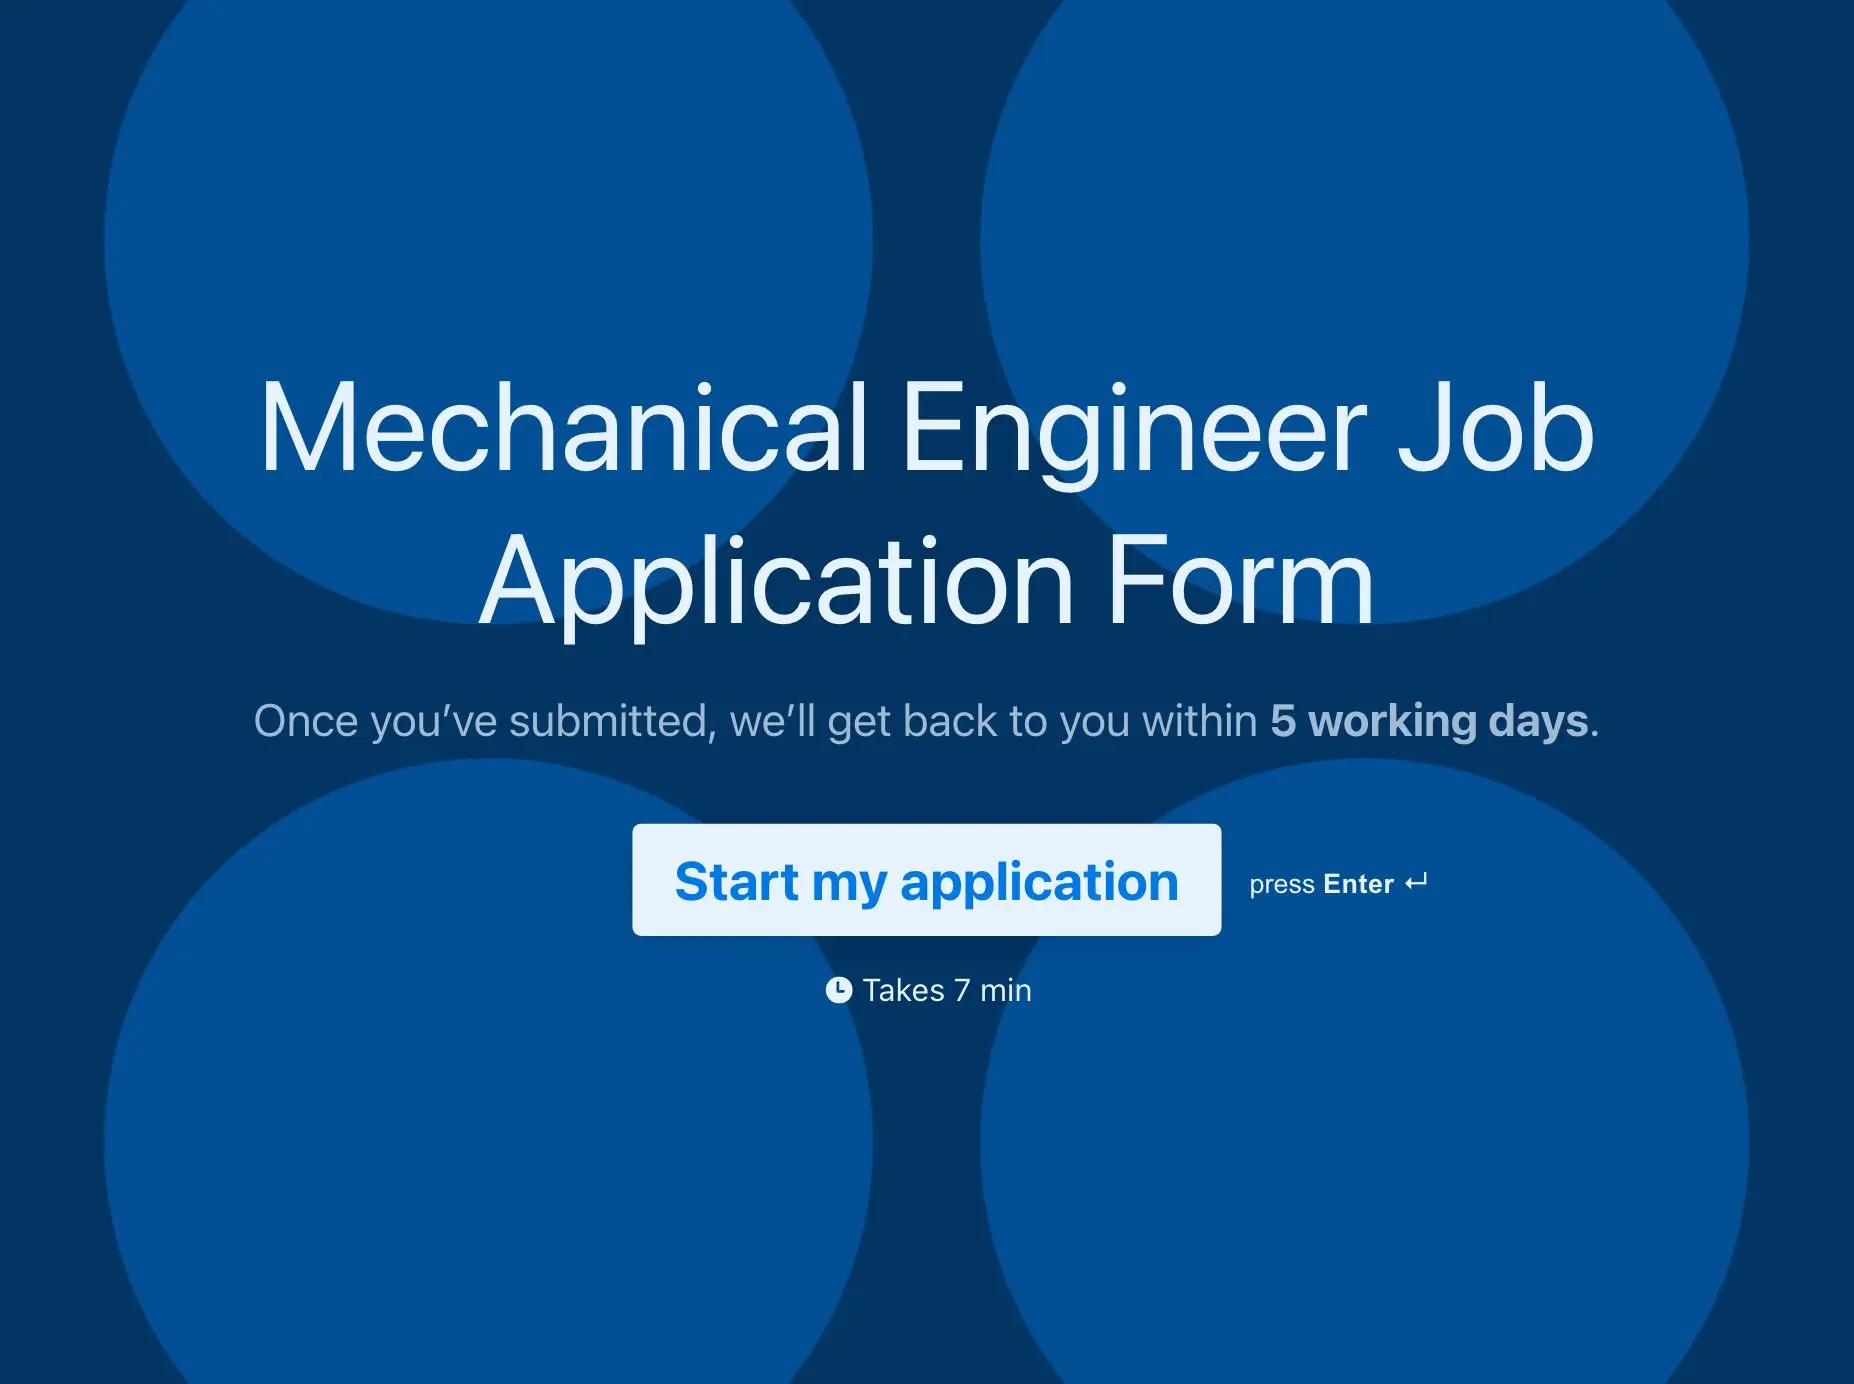 Mechanical Engineer Job Application Form Template Hero